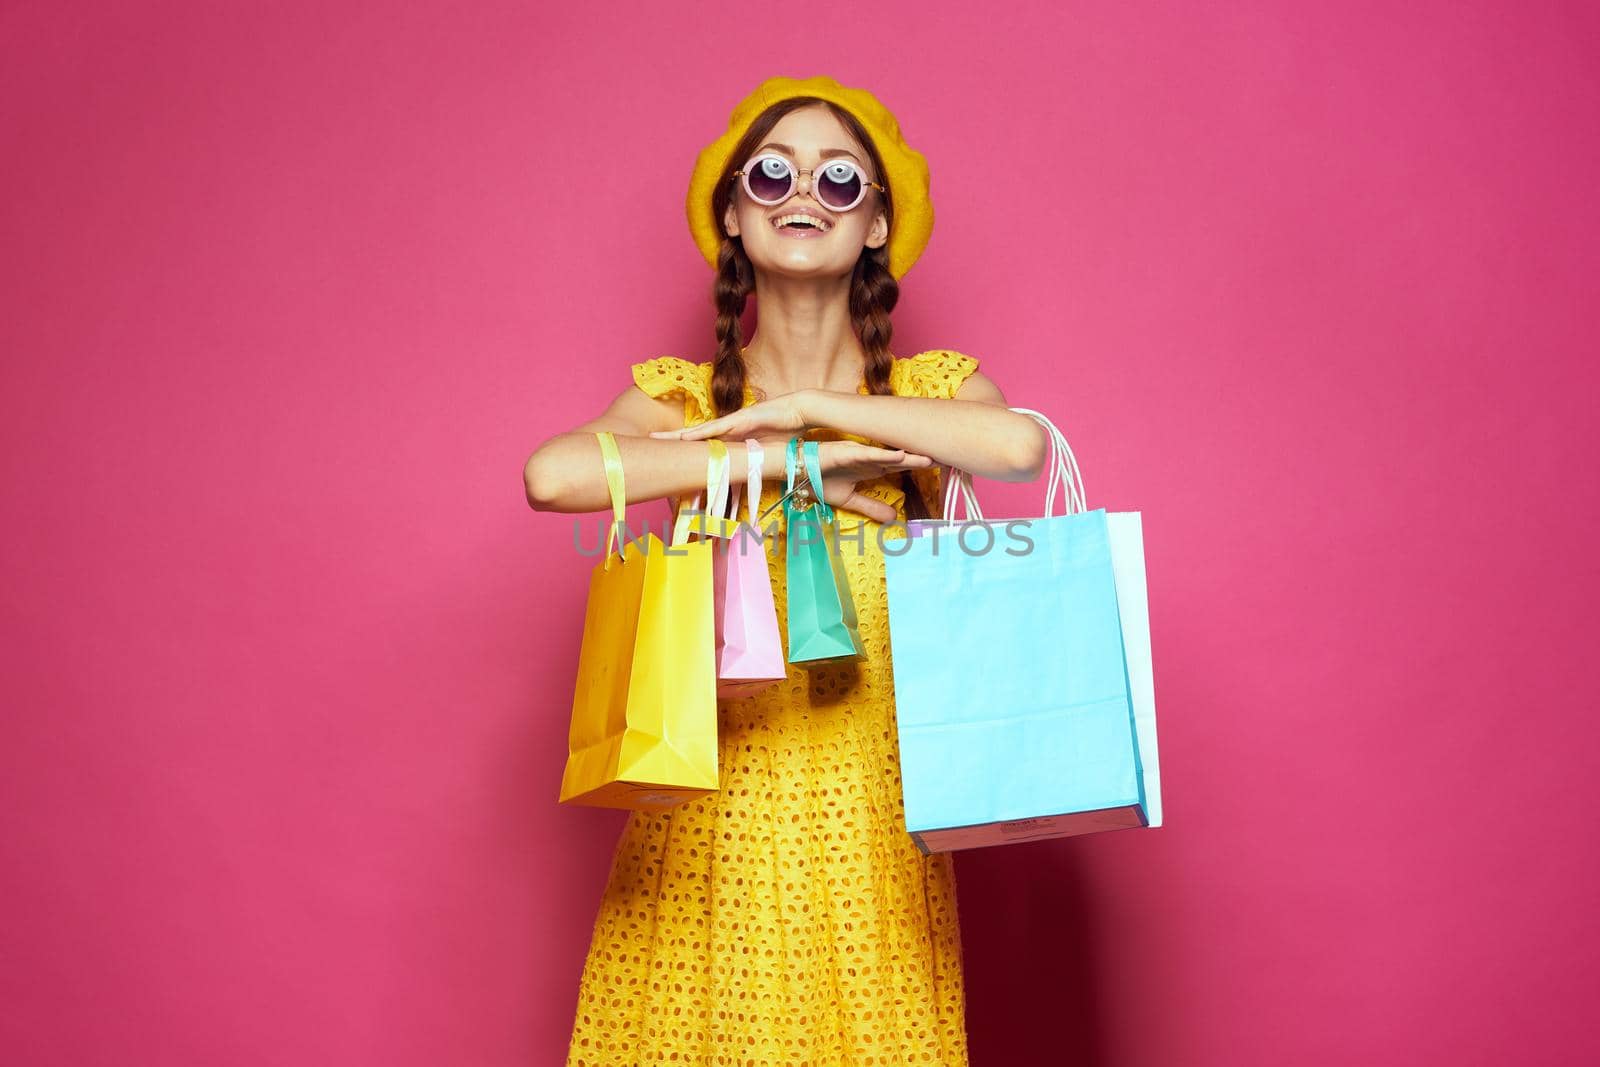 glamorous woman wearing sunglasses posing shopping fashion isolated background. High quality photo